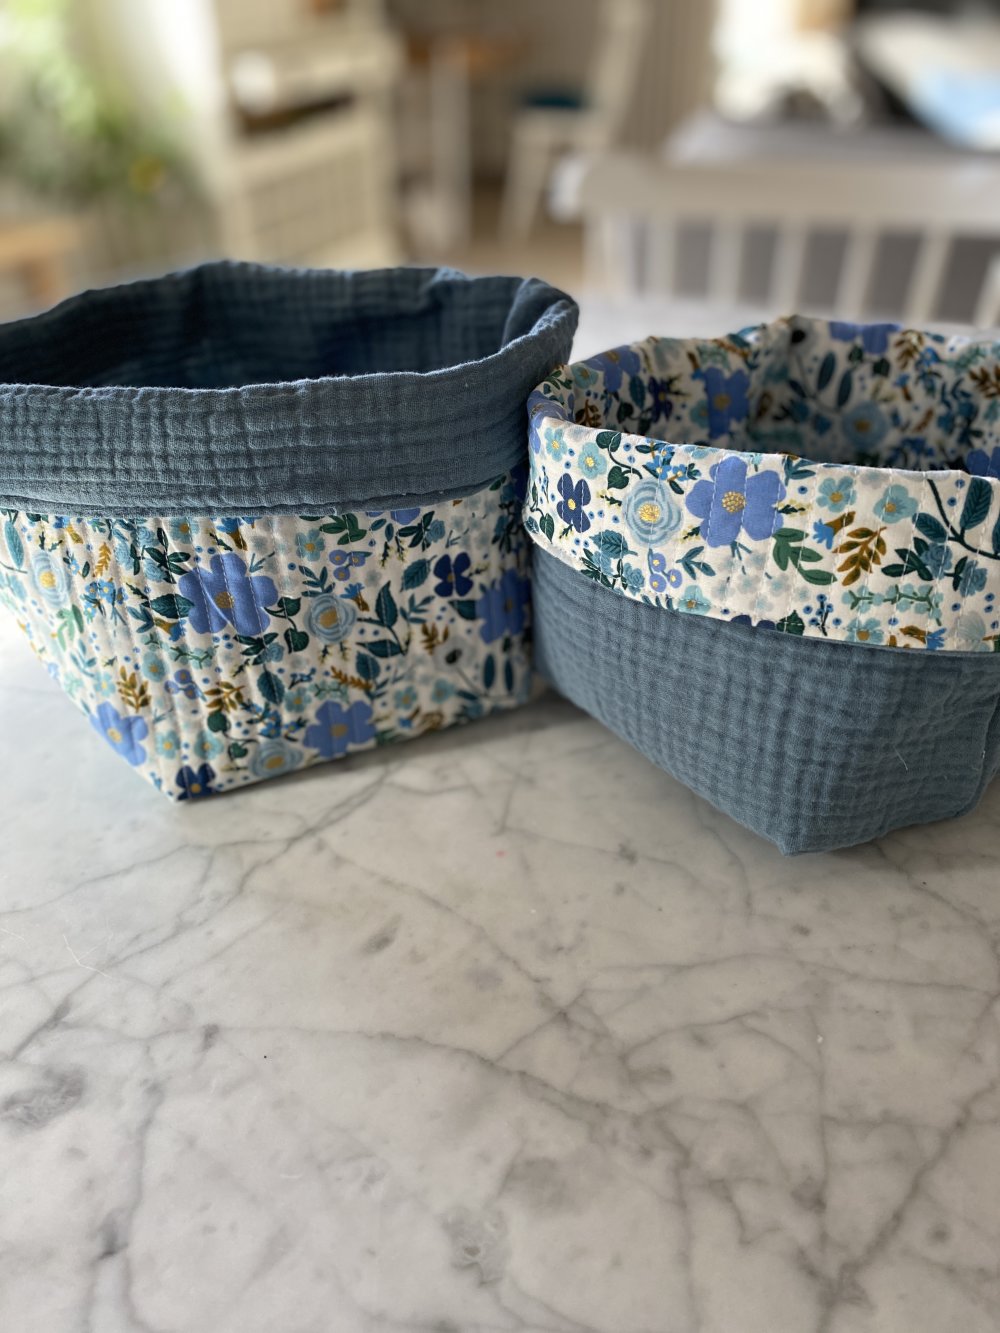 Coton lavable en tissu BIO fleuris et panier, Handmade in France